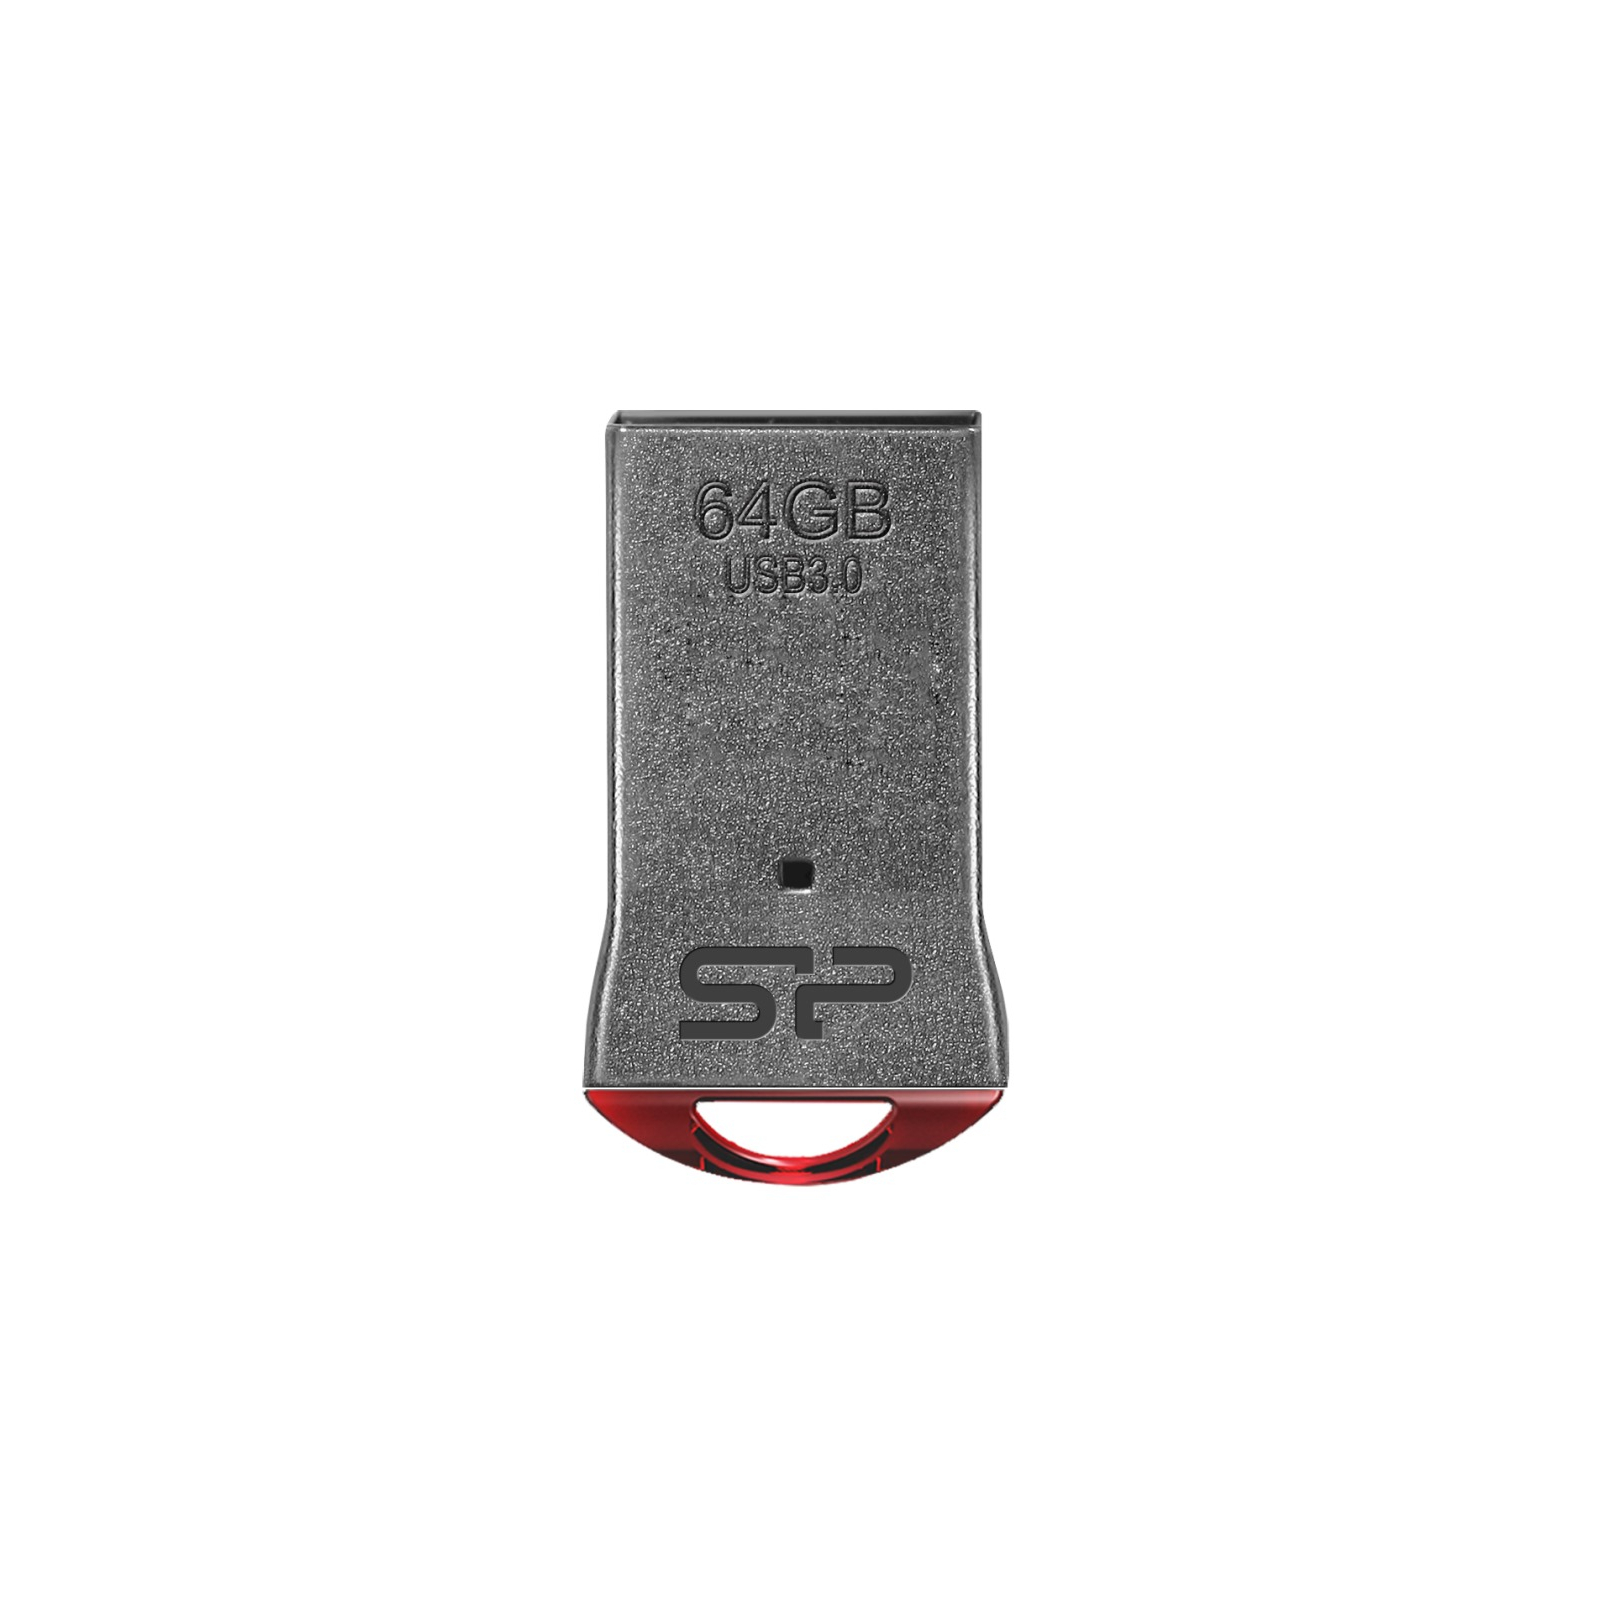 USB флеш накопитель Silicon Power 16GB JEWEL J01 RED USB 3.0 (SP016GBUF3J01V1R)